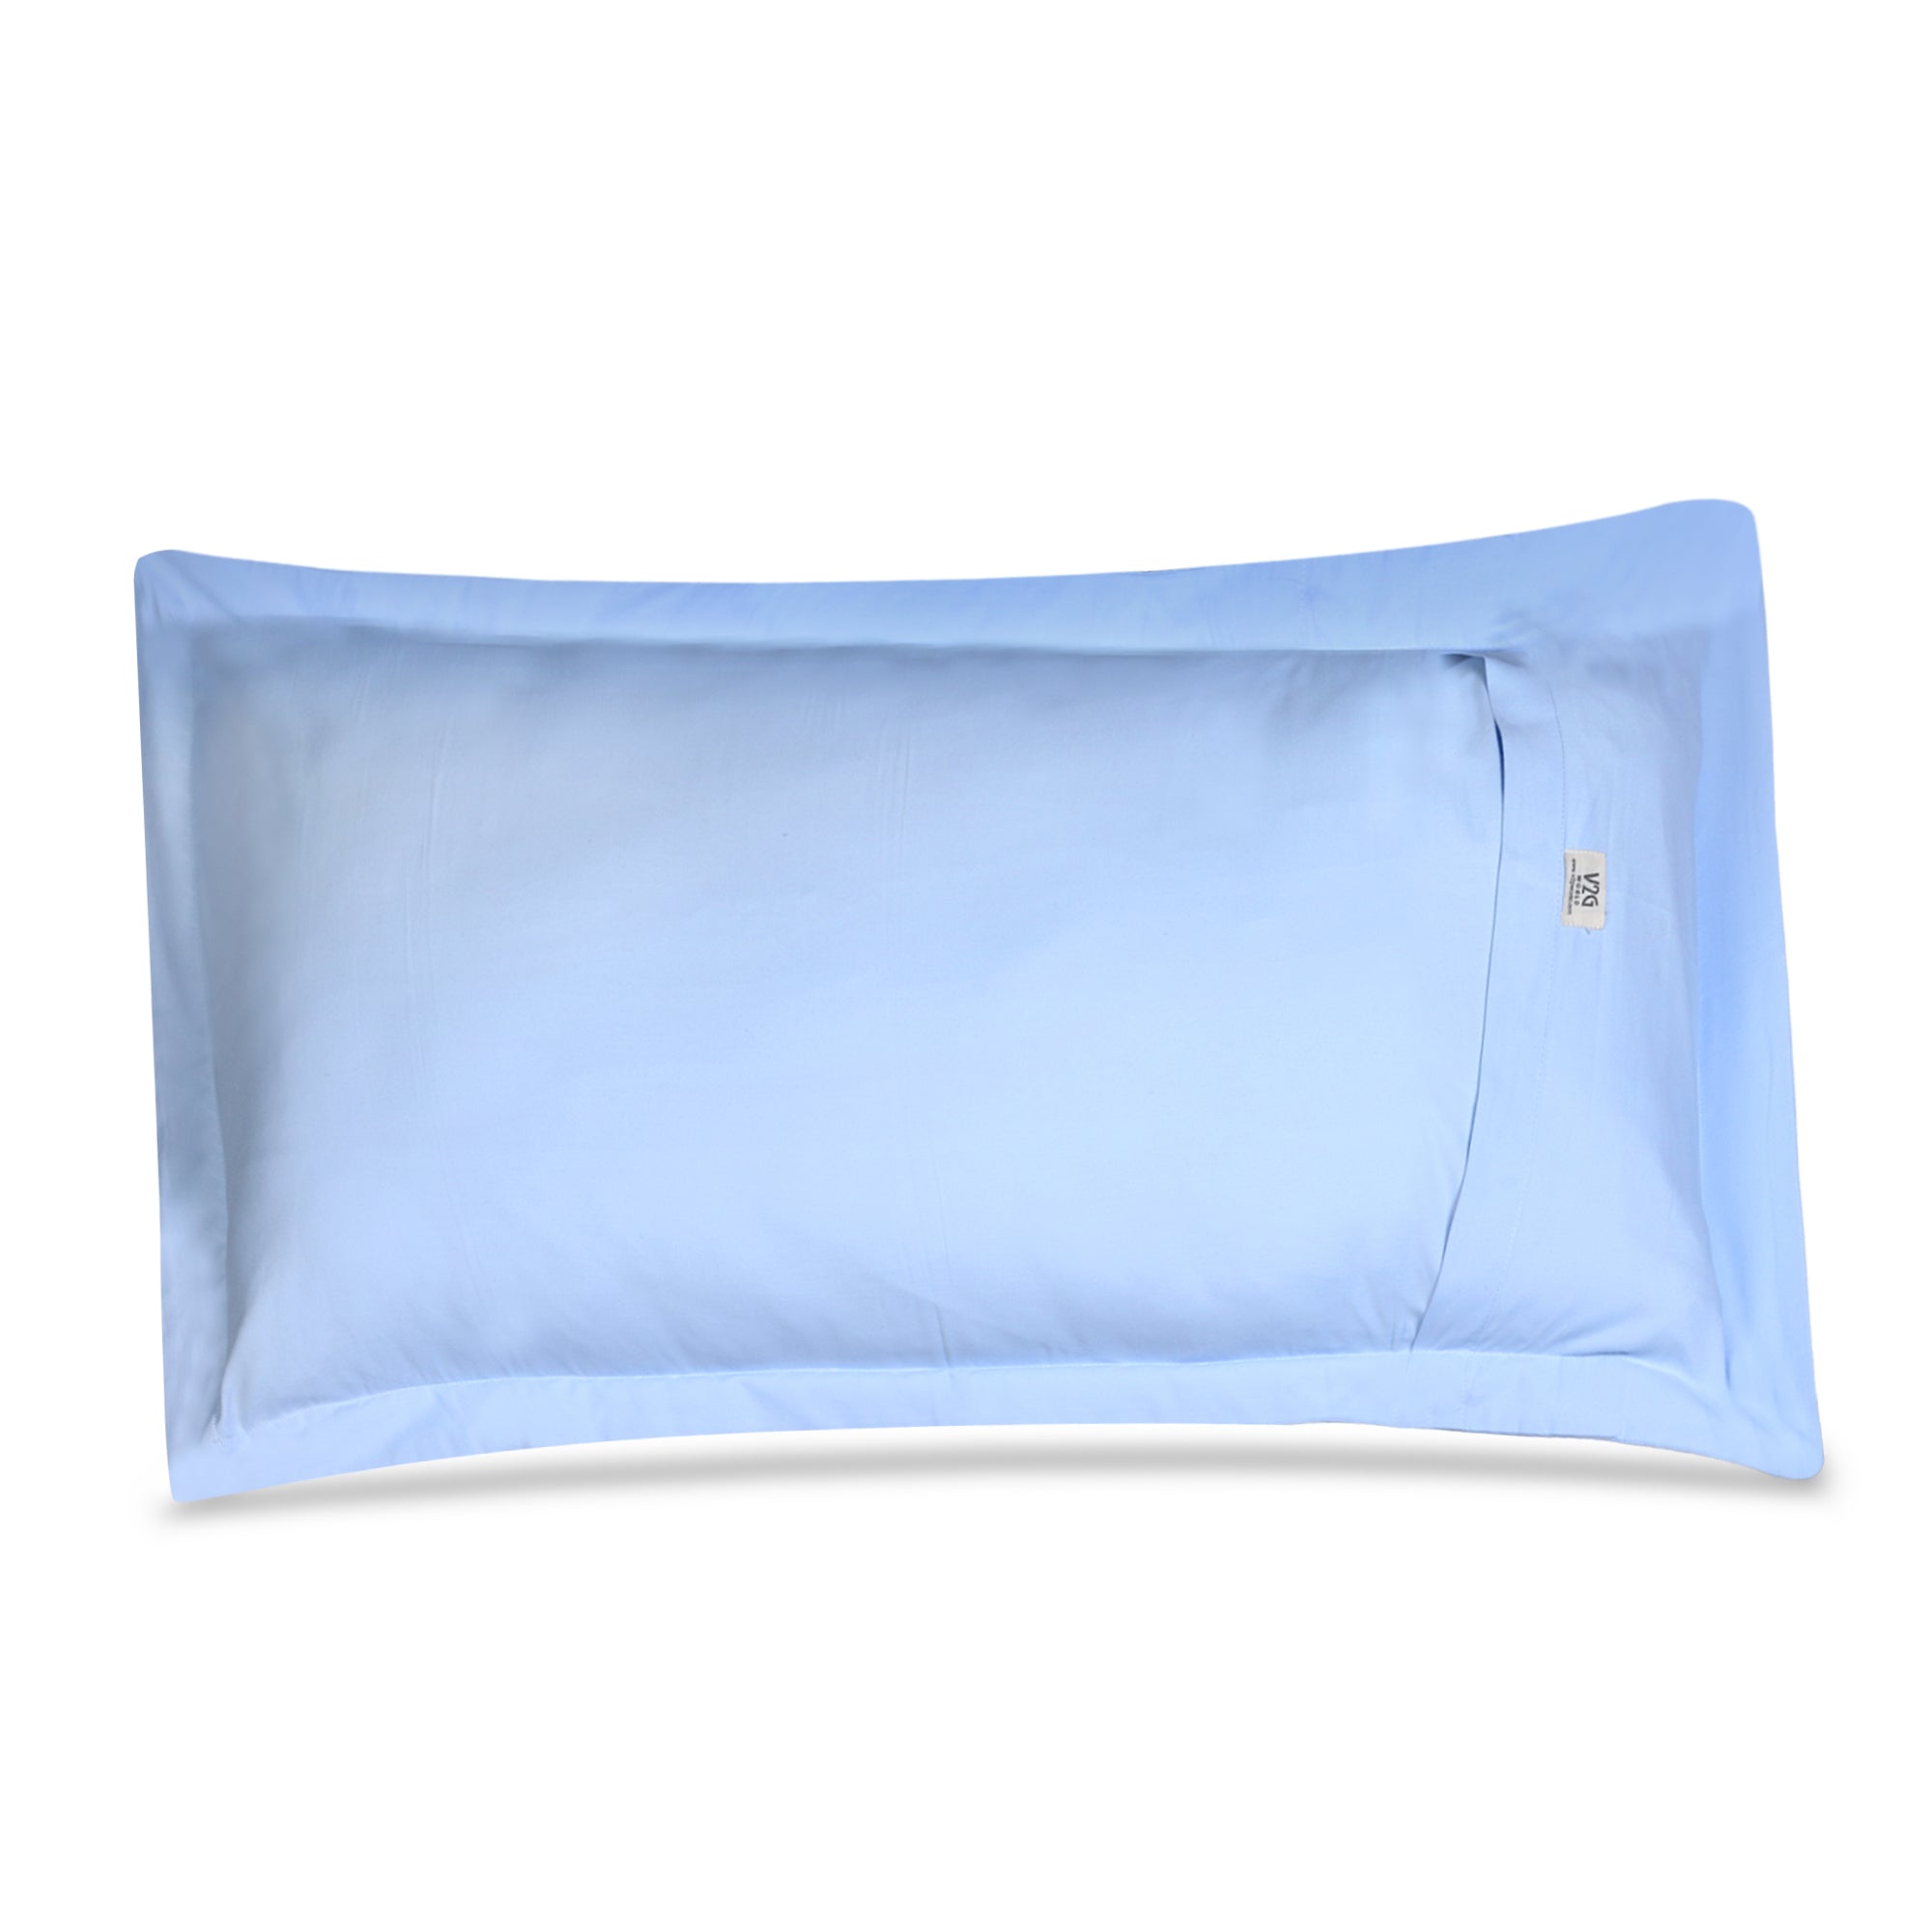 Pillow Covers- Plain Color-Sky Blue with Lace- Pair